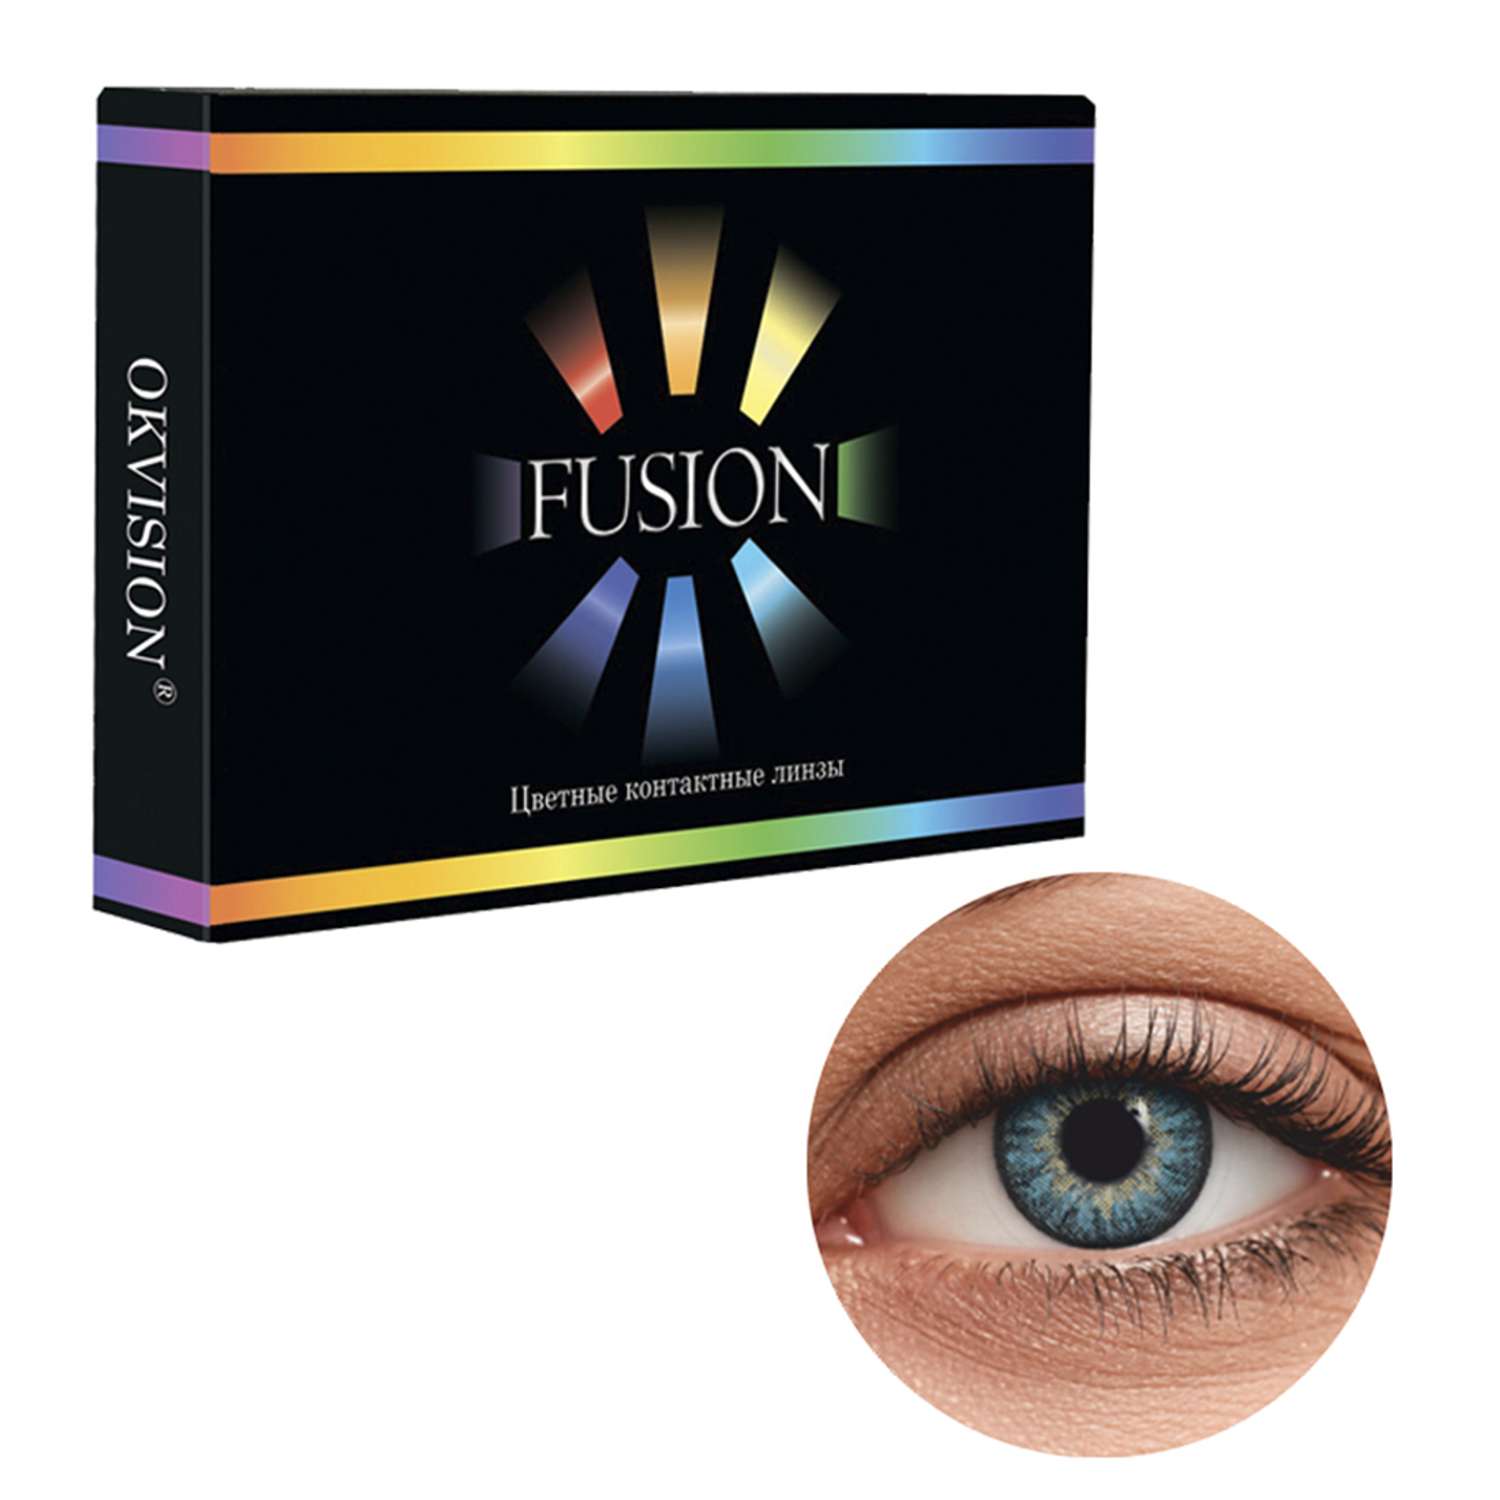 Цветные контактные линзы OKVision Fusion monthly R 8.6 -1.00 цвет Sky Blue 2 шт 1 месяц - фото 1